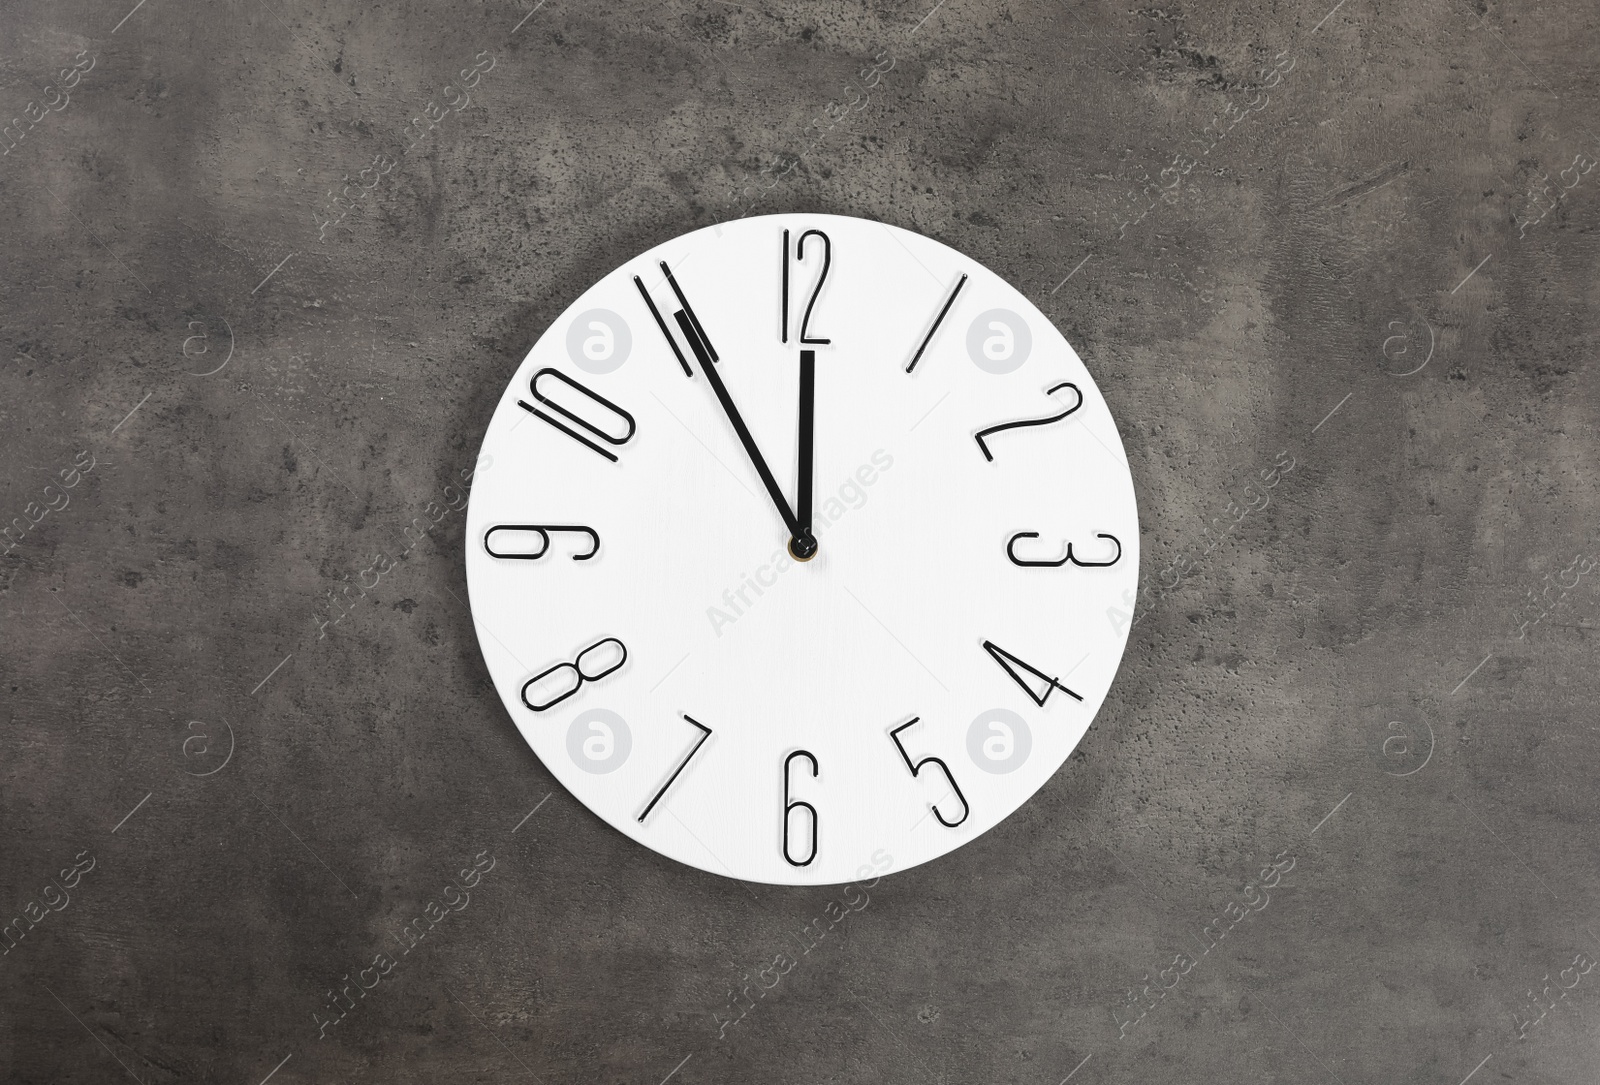 Photo of Stylish analog clock hanging on grey wall. New Year countdown